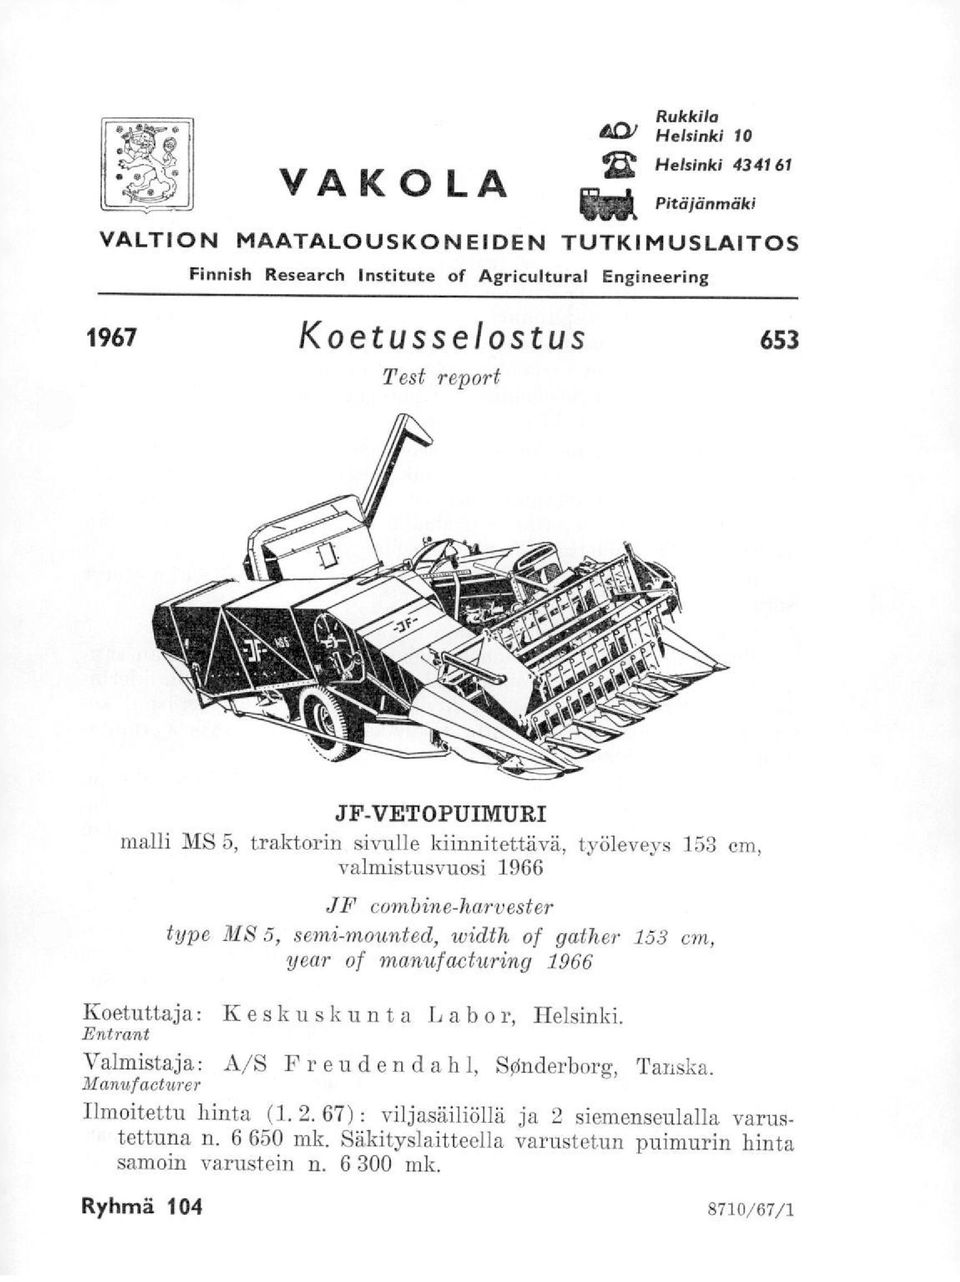 semi-mounted, width of gather 153 cm, year of manufacturing 1966 Koetuttaja: Keskuskunta Labo r, Helsinki. Entrant Valmistaja: A/S Freudendah 1, SOnderborg, Tanska.